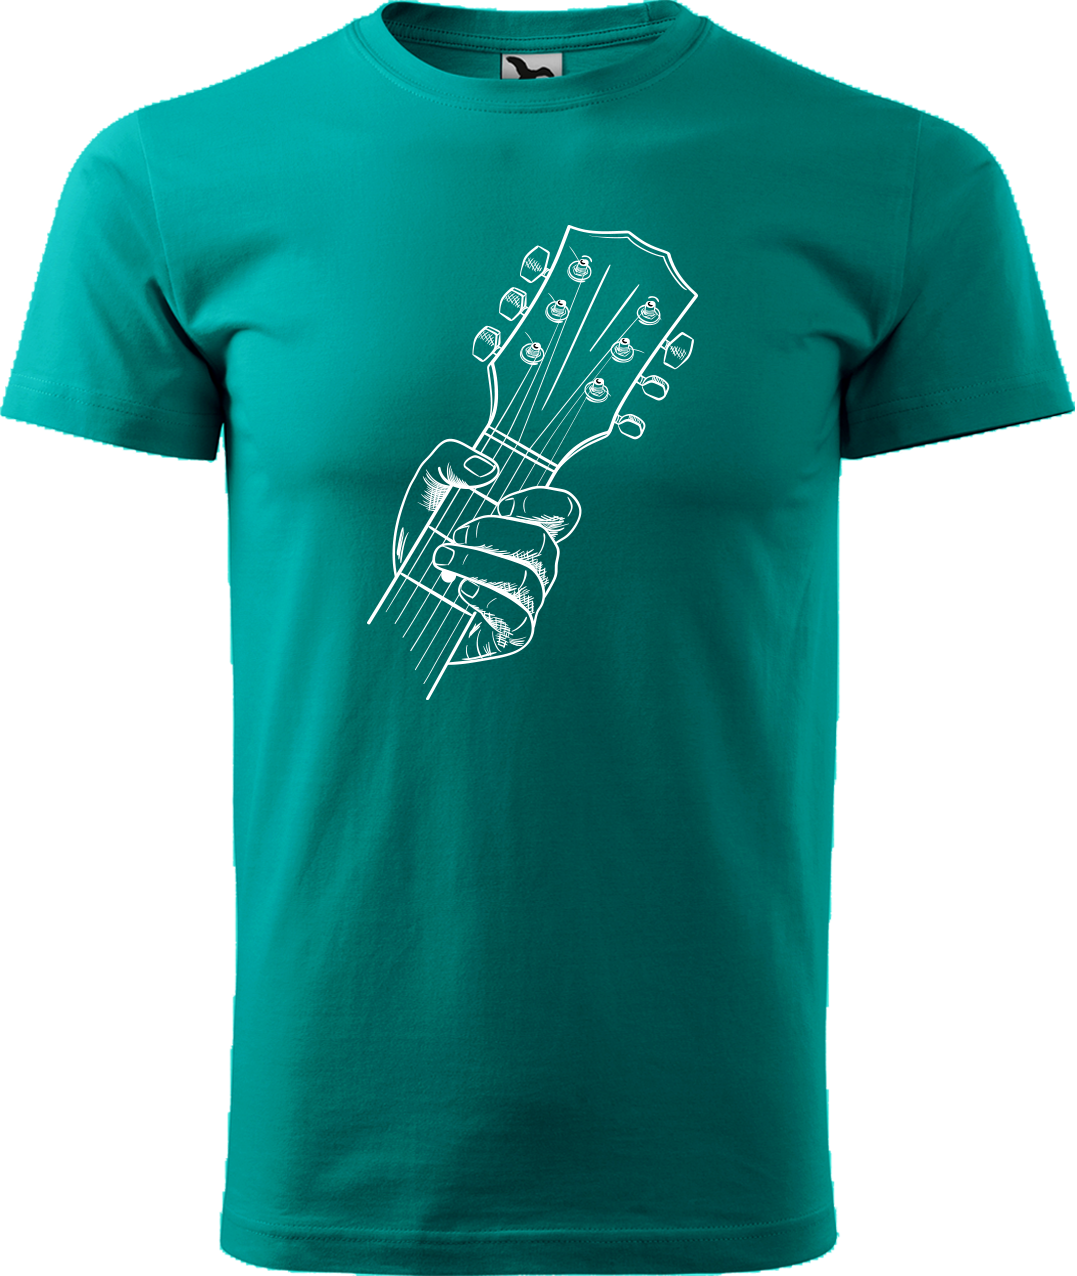 Pánské tričko s kytarou - Hlava kytary Velikost: 4XL, Barva: Emerald (19)